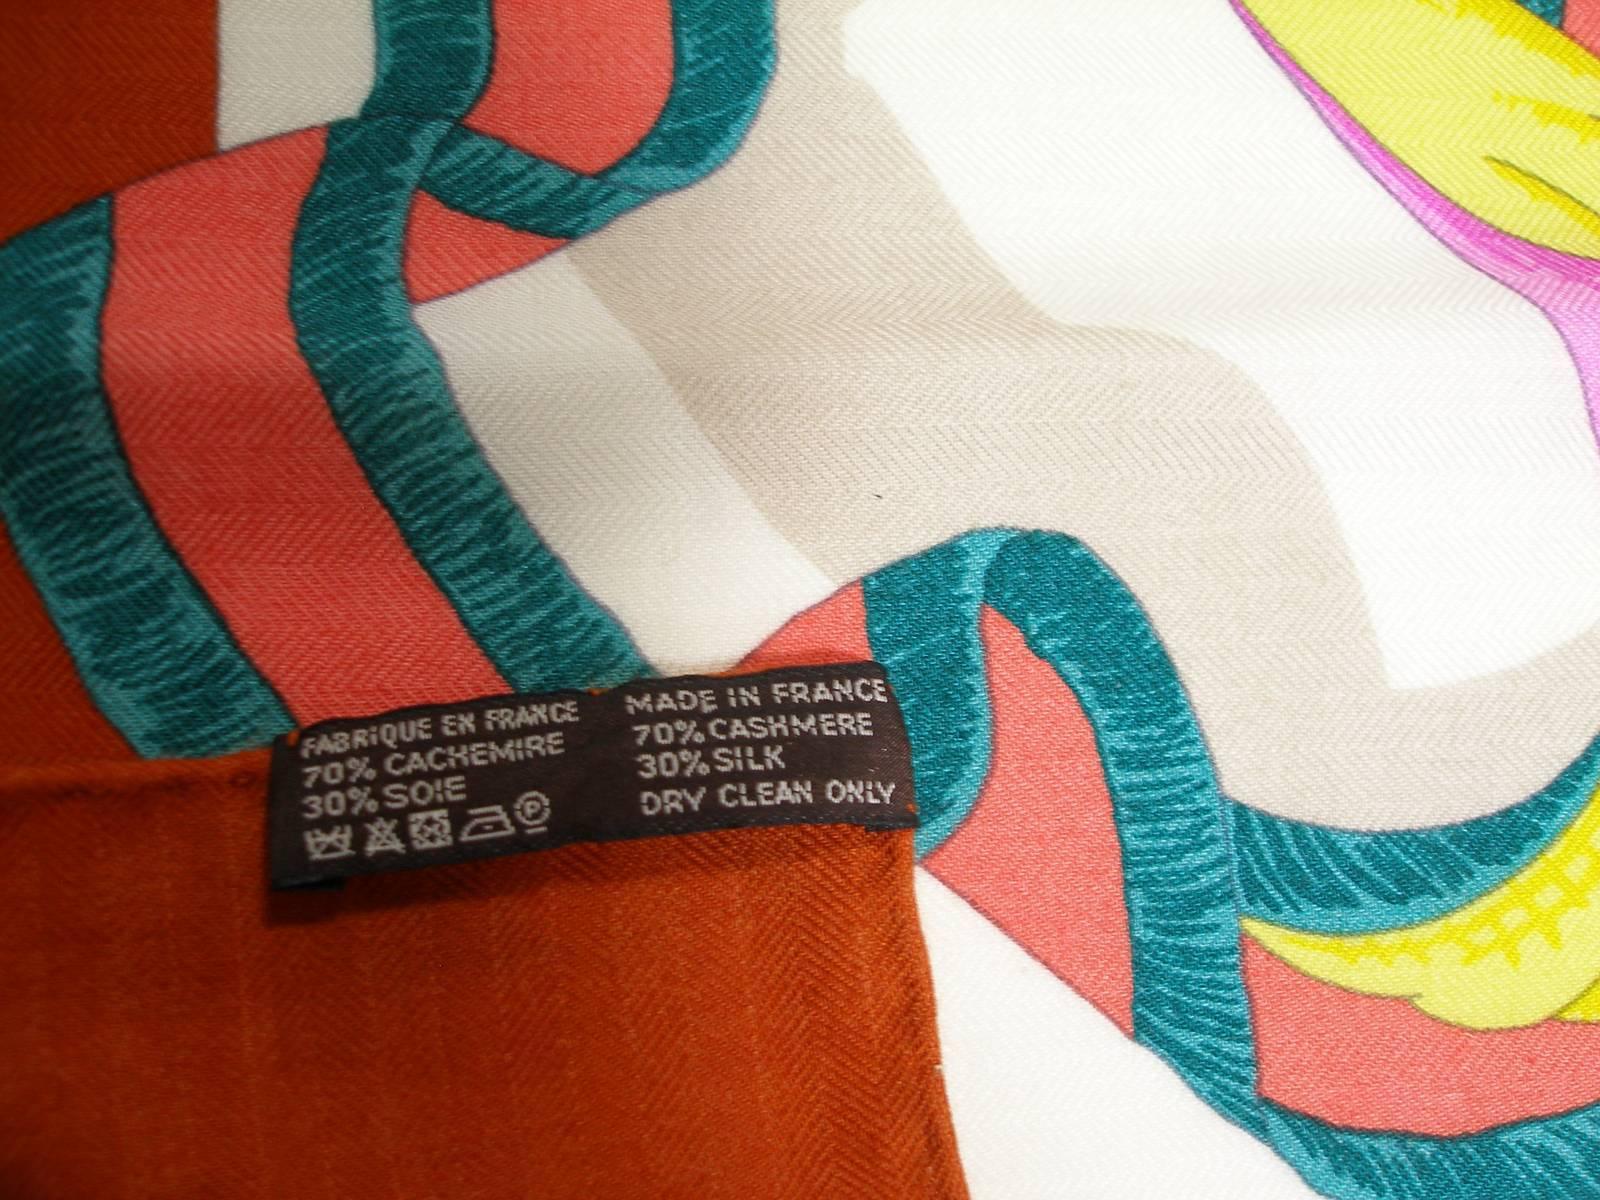 Hermès 140cm or 55 Inch GM Shawl Mors à la Connectable Cashmere Brand New 2